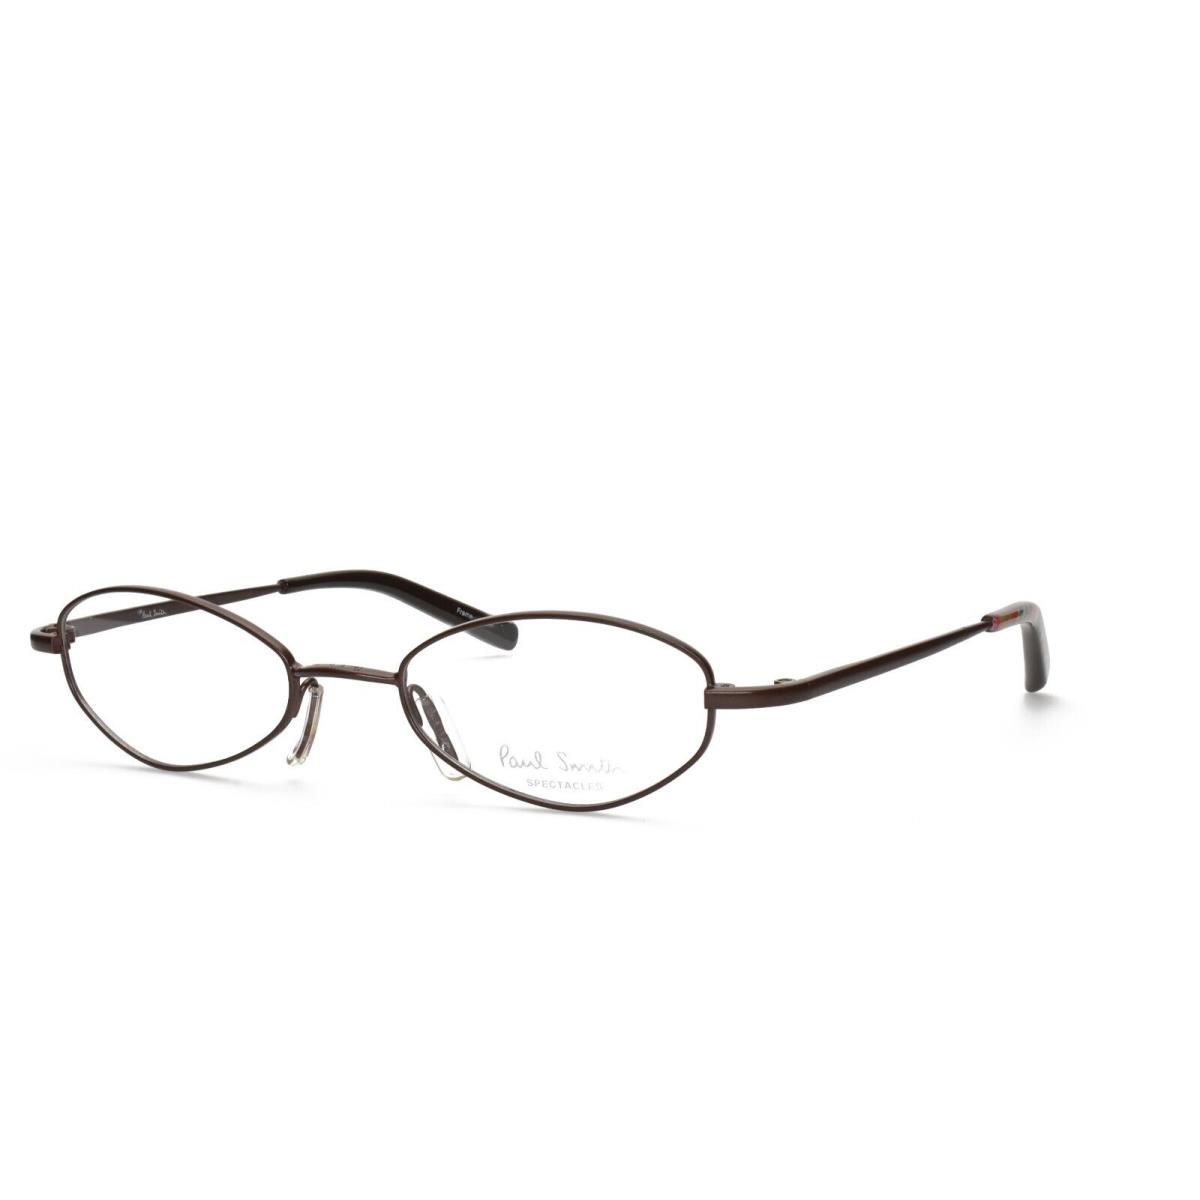 Paul Smith 198 Cho 48-19-132 Brown Vtg Vintage Eyeglasses Frames